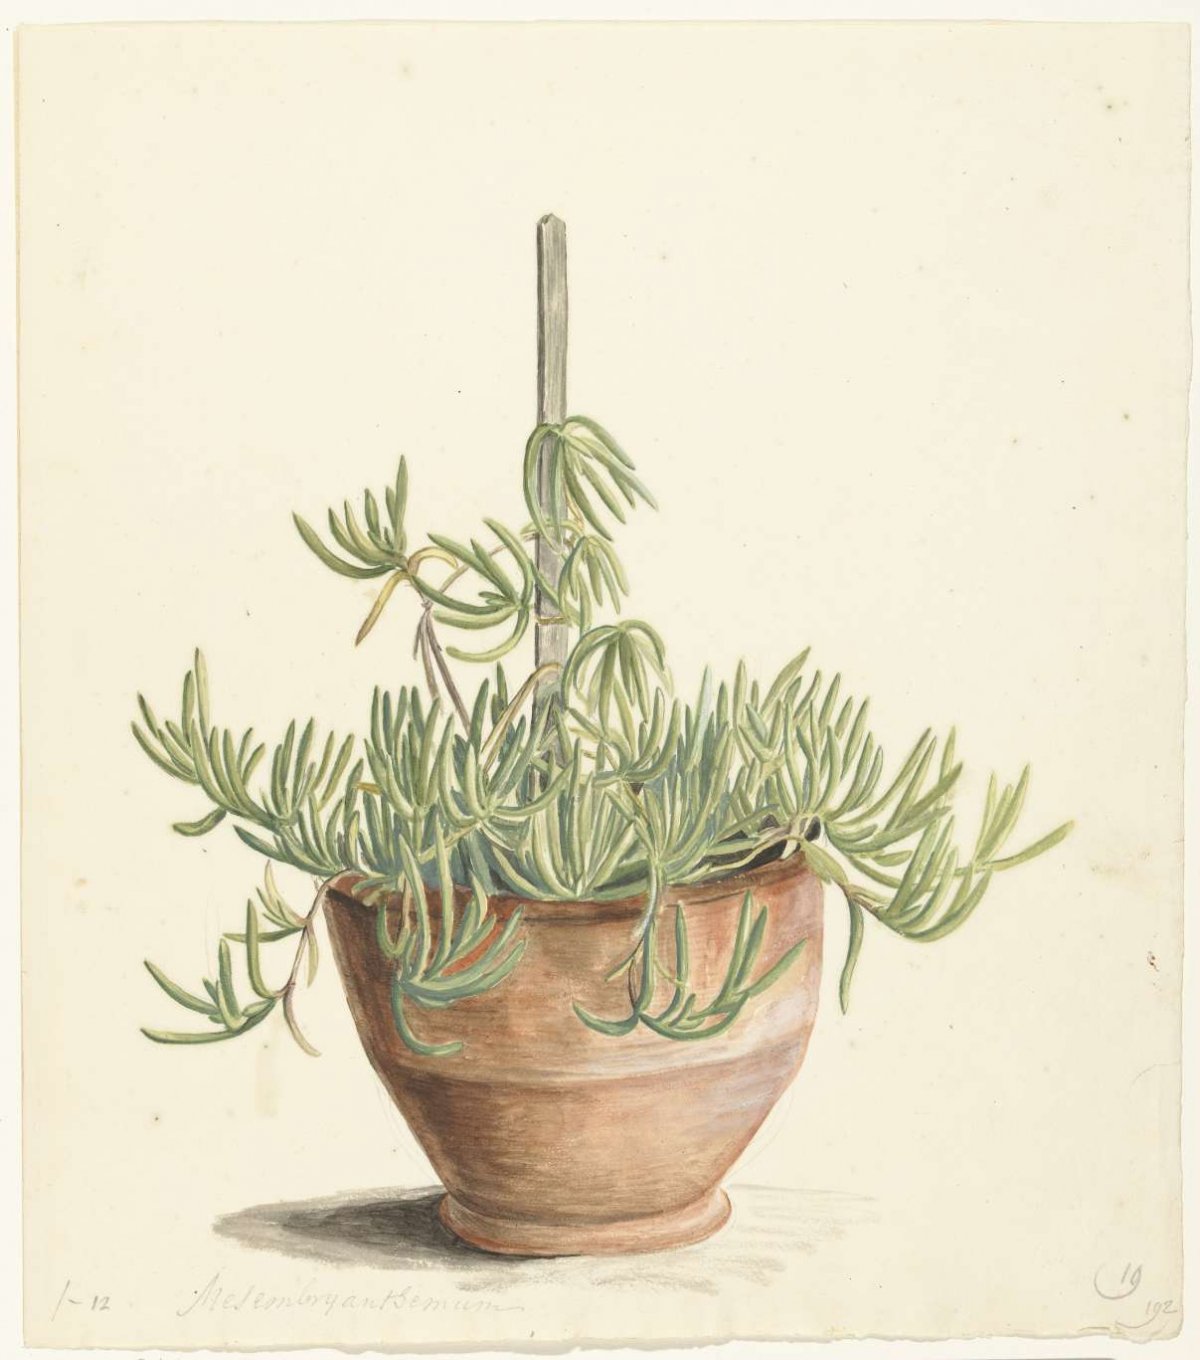 Mesembryanthemum in the family Aizoaceae, Laurens Vincentsz. van der Vinne, 1668 - 1729